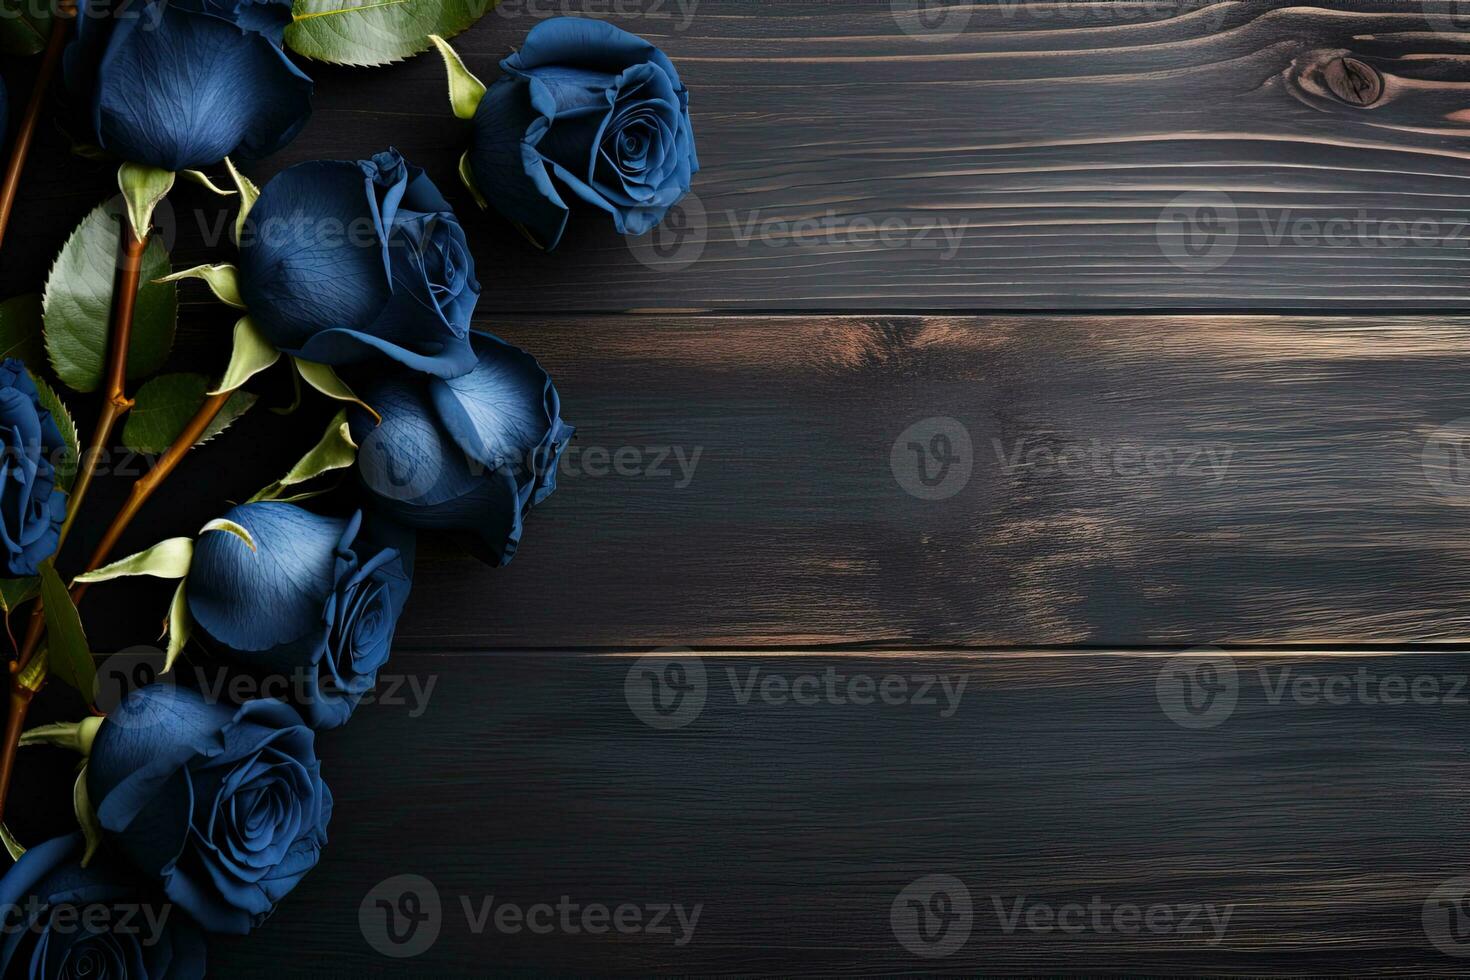 hermosa azul rosas en oscuro de madera antecedentes parte superior vista, floral modelo con Copiar espacio foto